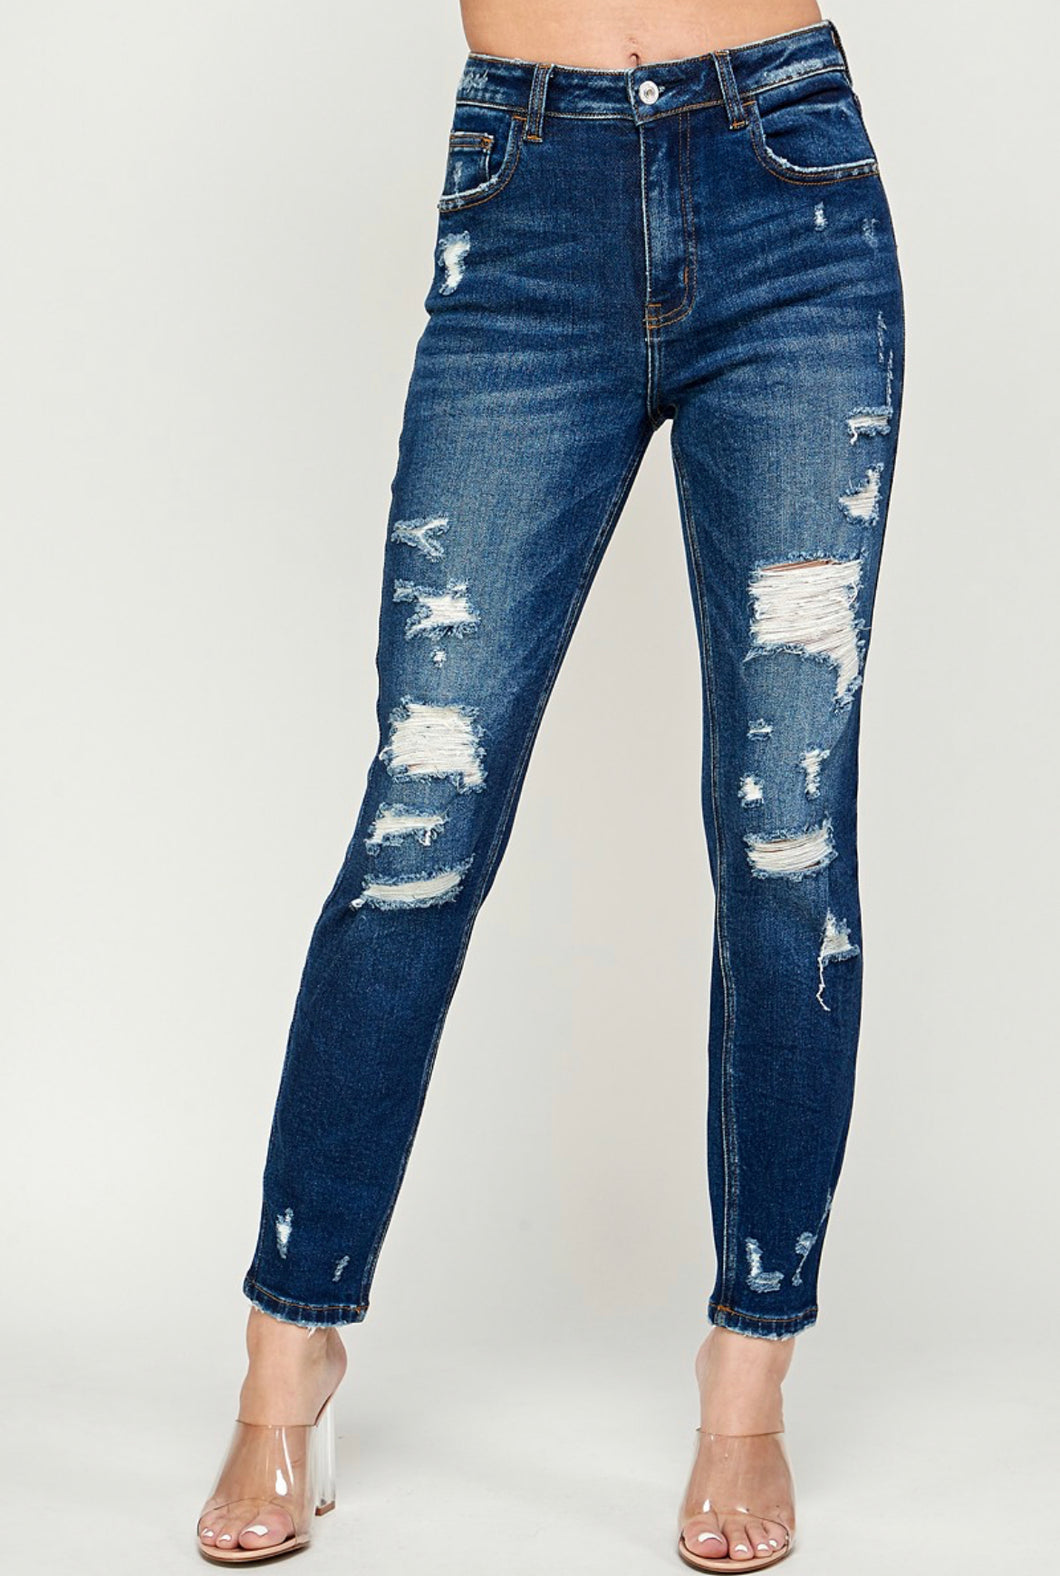 HR Distressed Skinny Jeans